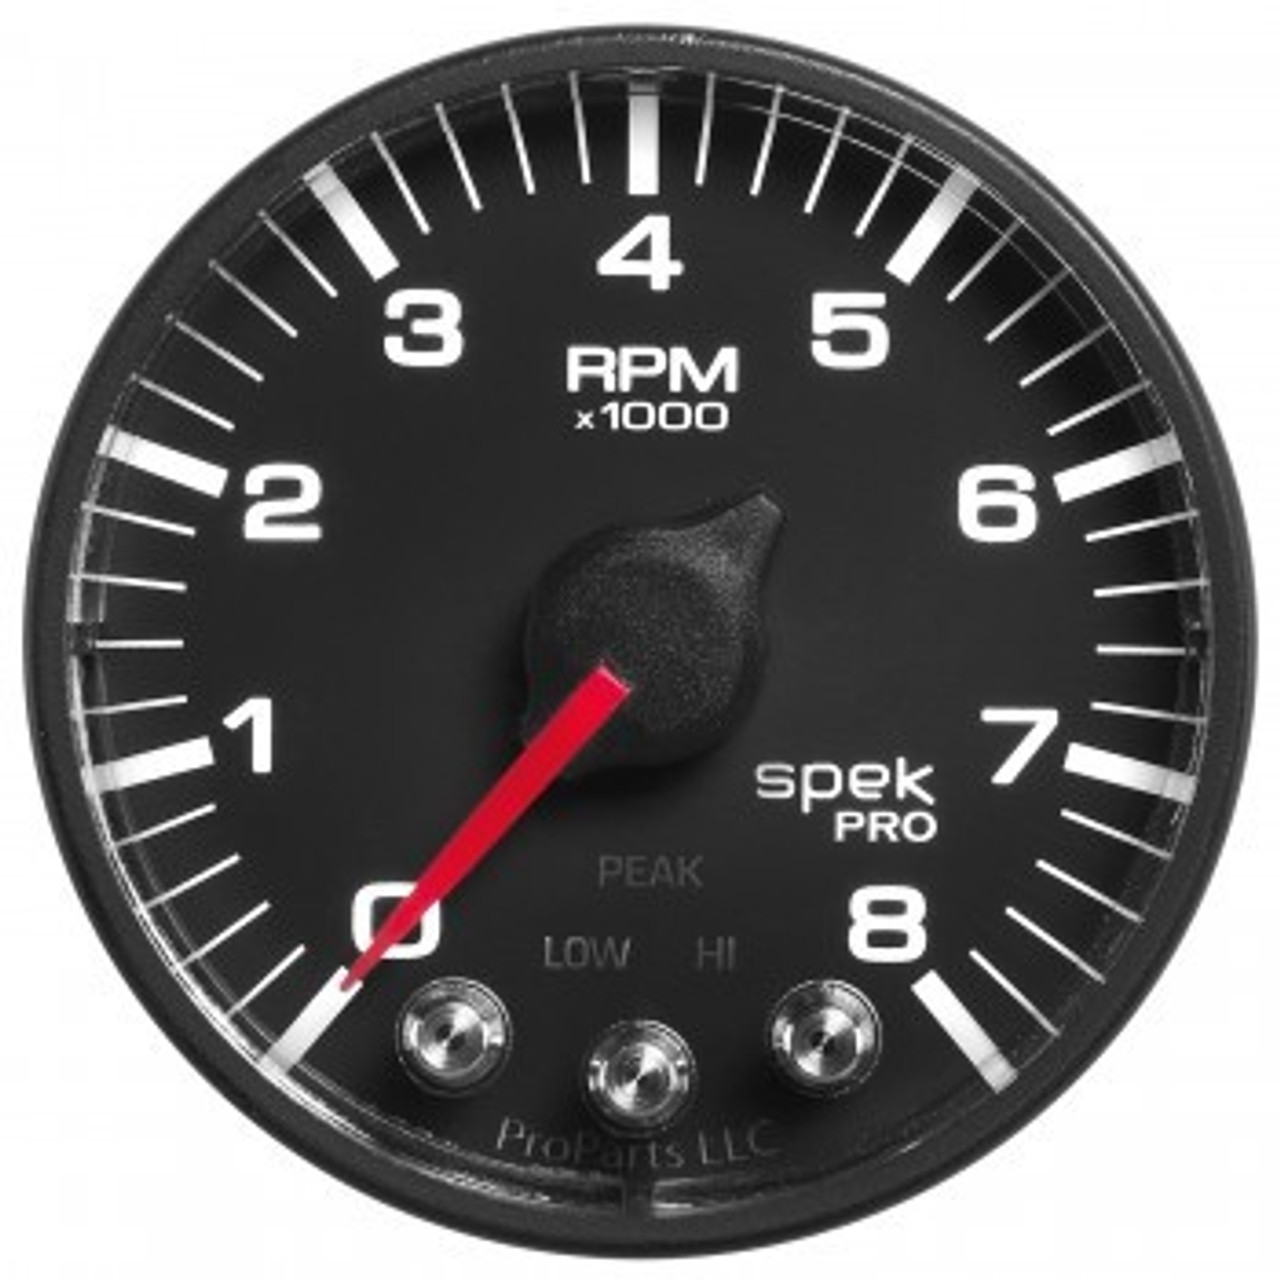 Spek-Pro 2-1/16 Tach w/ Shift Light & Peak Mem.